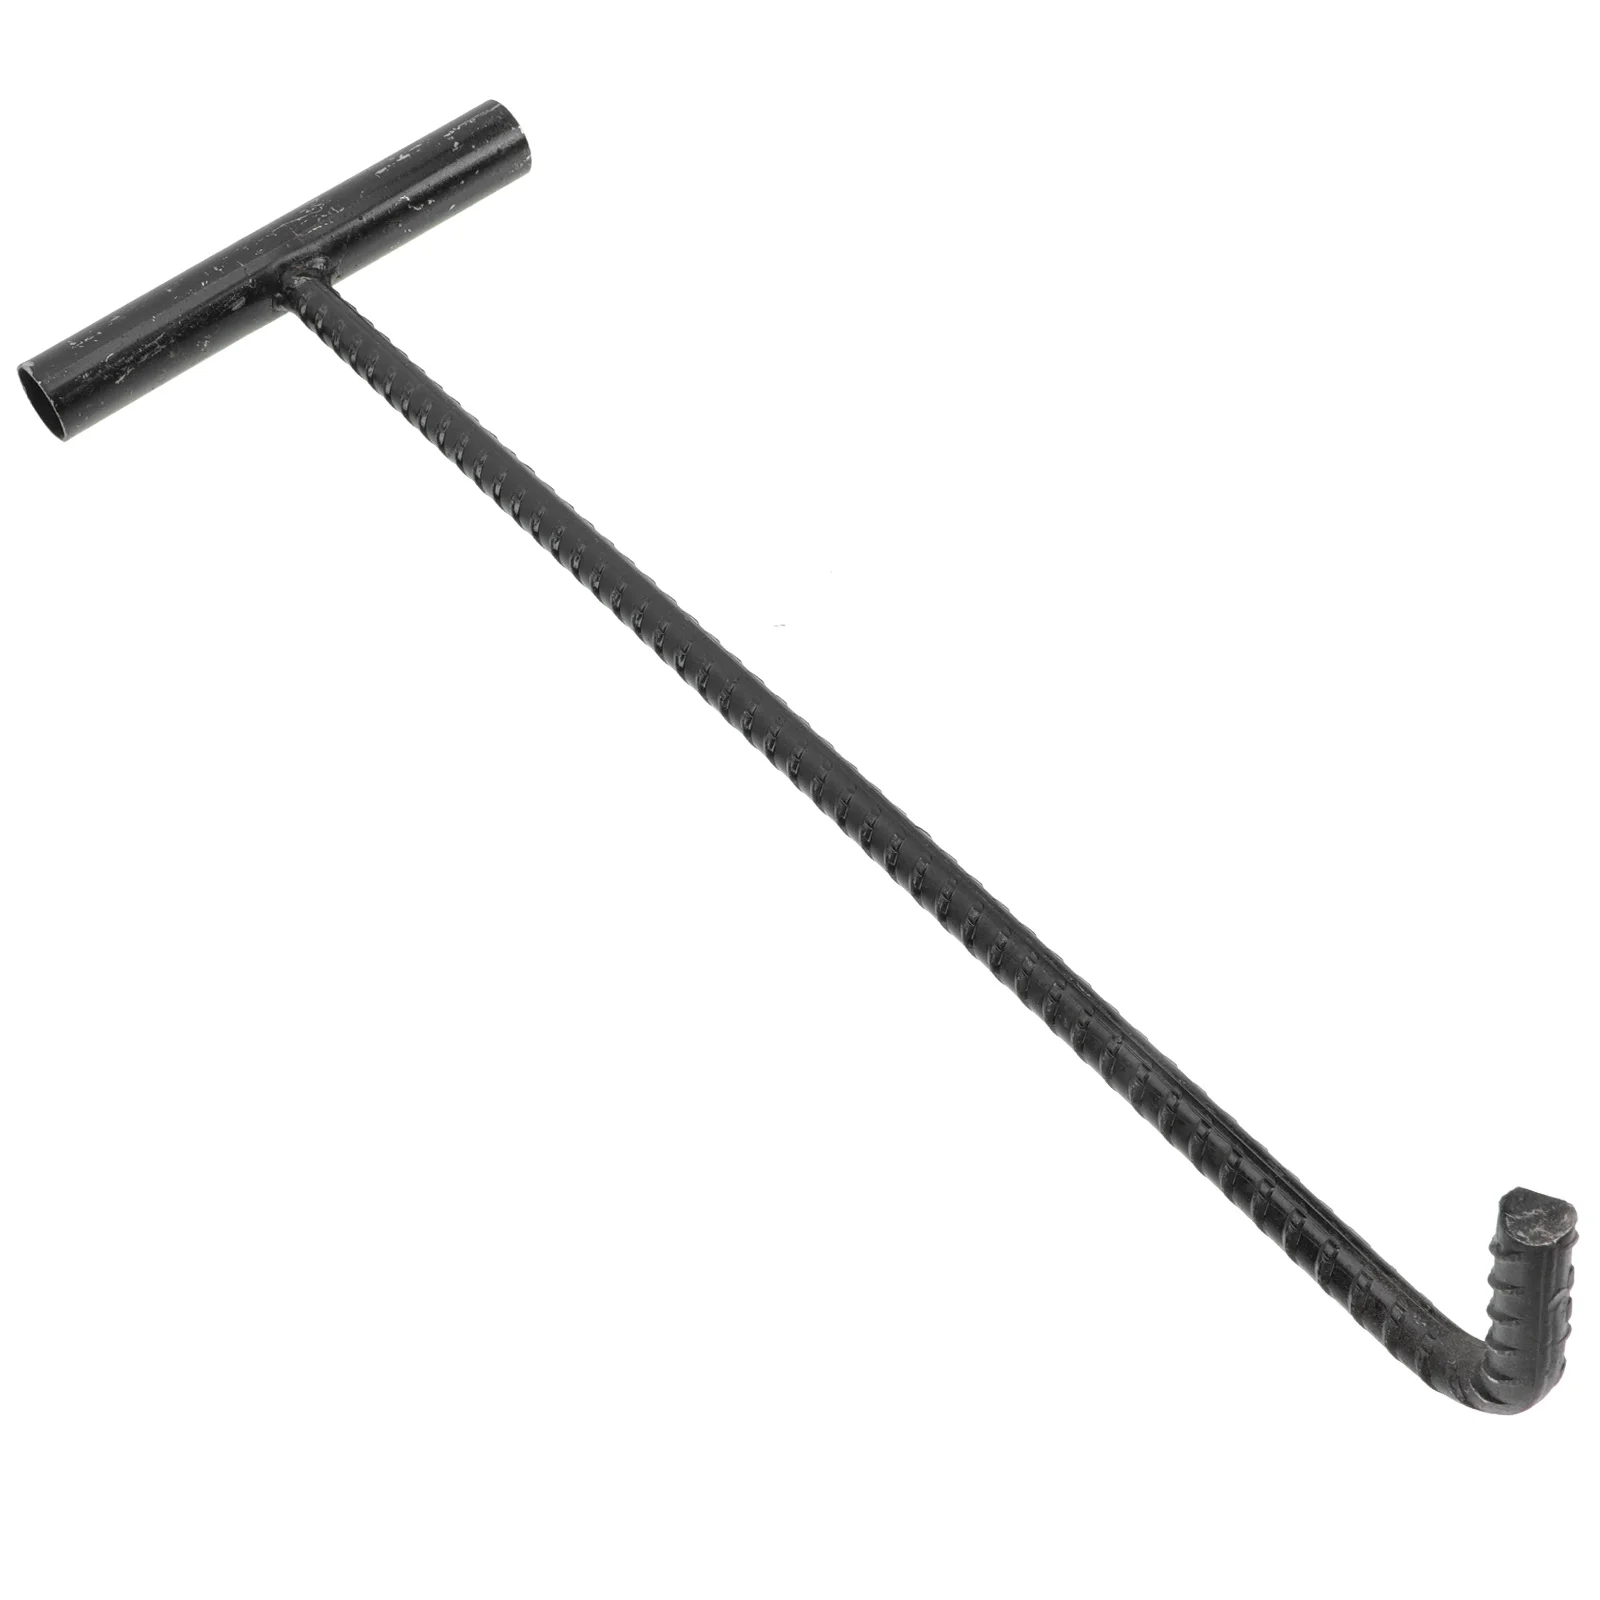 

Roller Shutter Hook Stainless Steel Metal Spring Pull Lifter Bin Door Lifting Gadget Tie Rod Tool Manhole Cover The Well